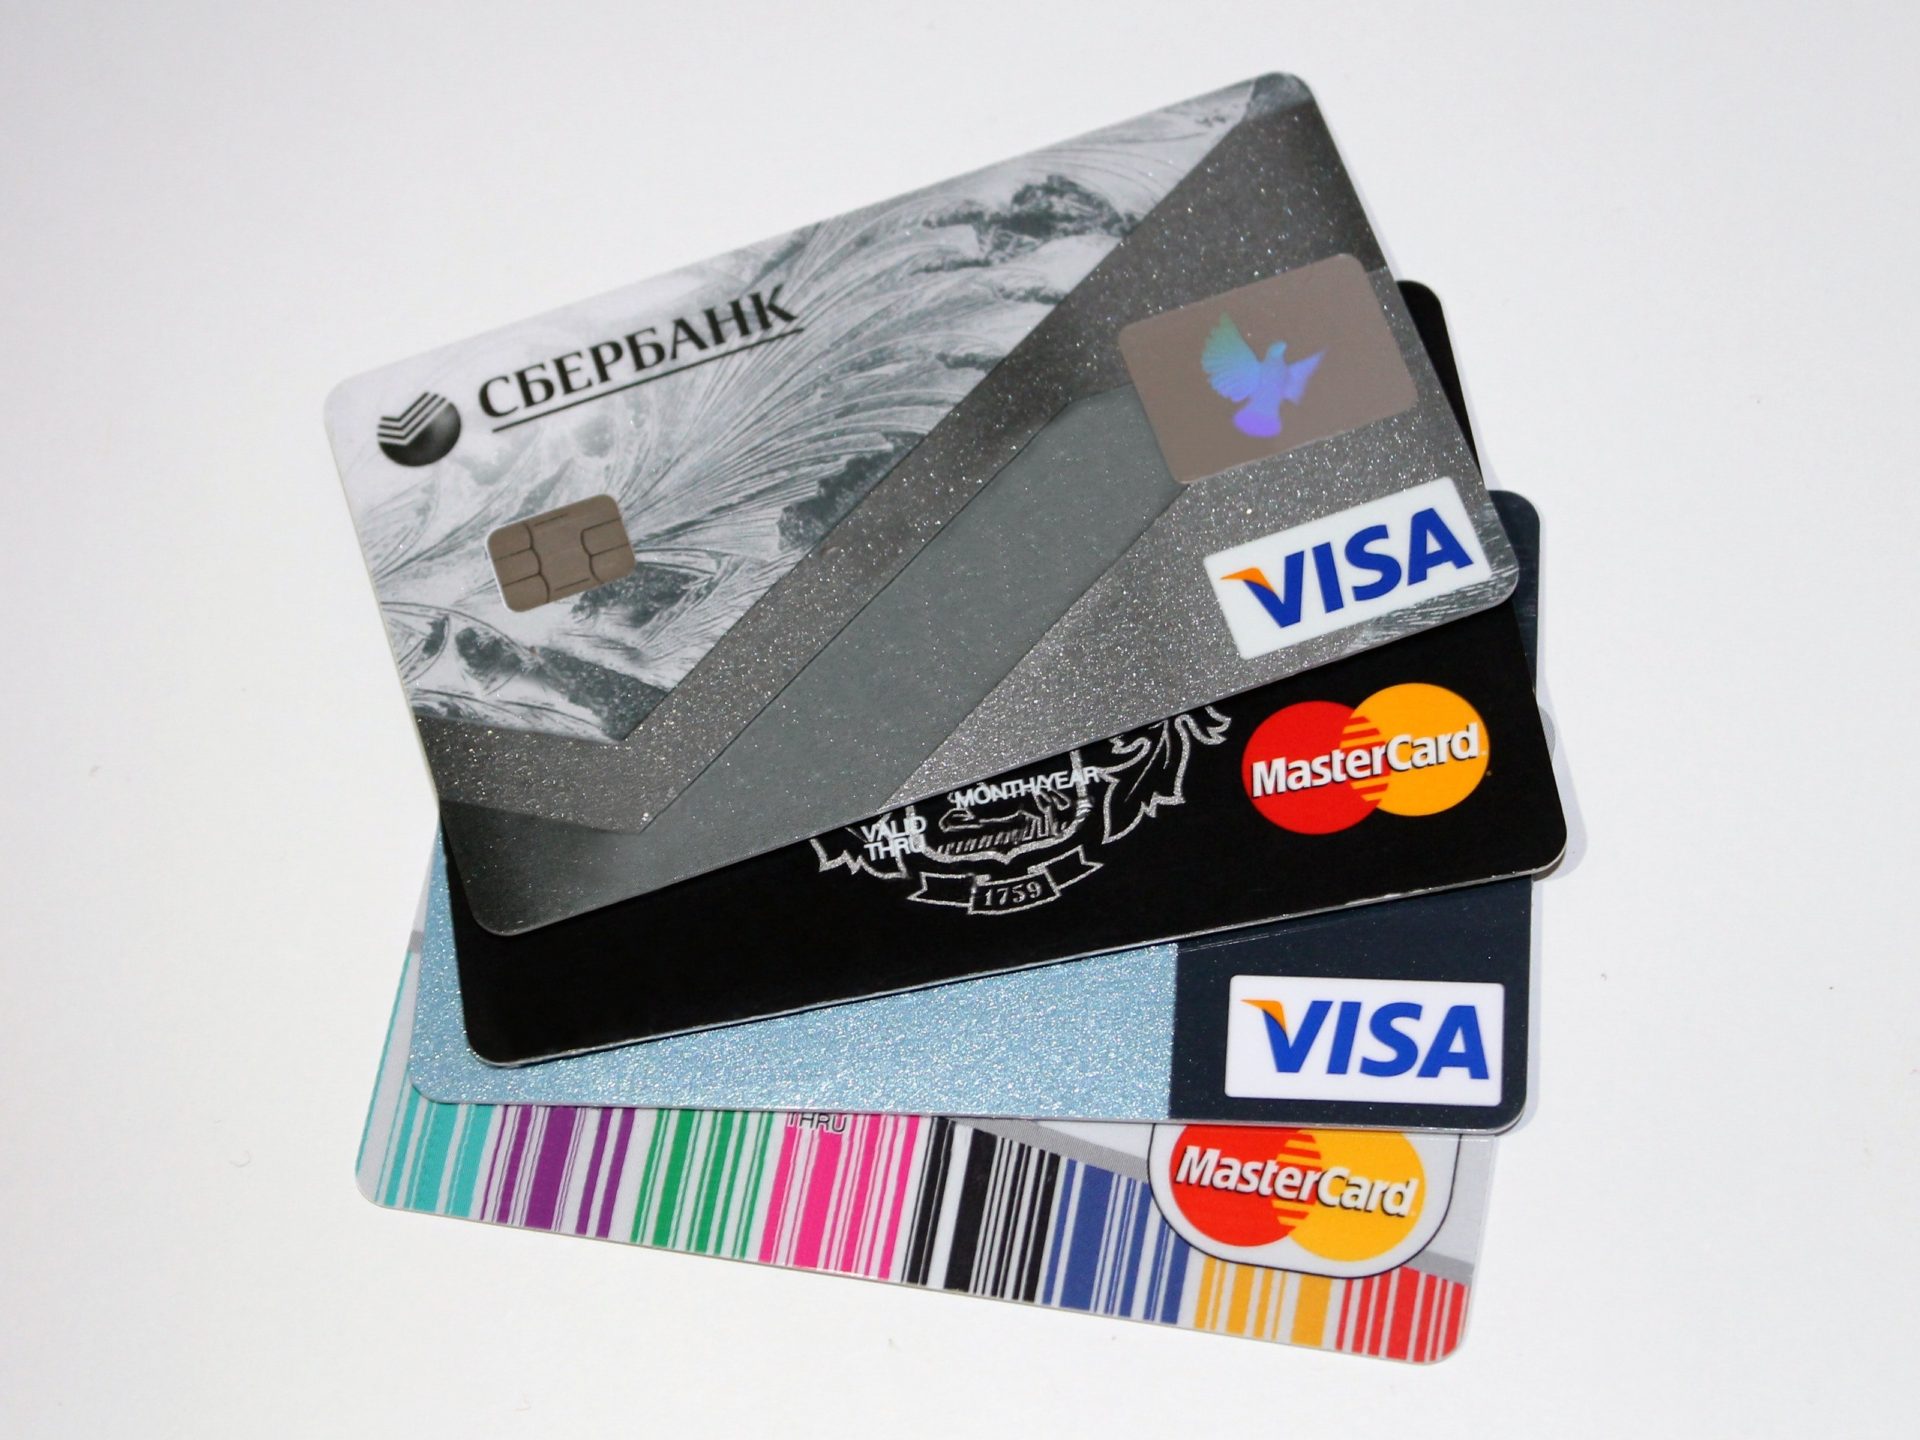 An image of Visa and Master Card credit cards